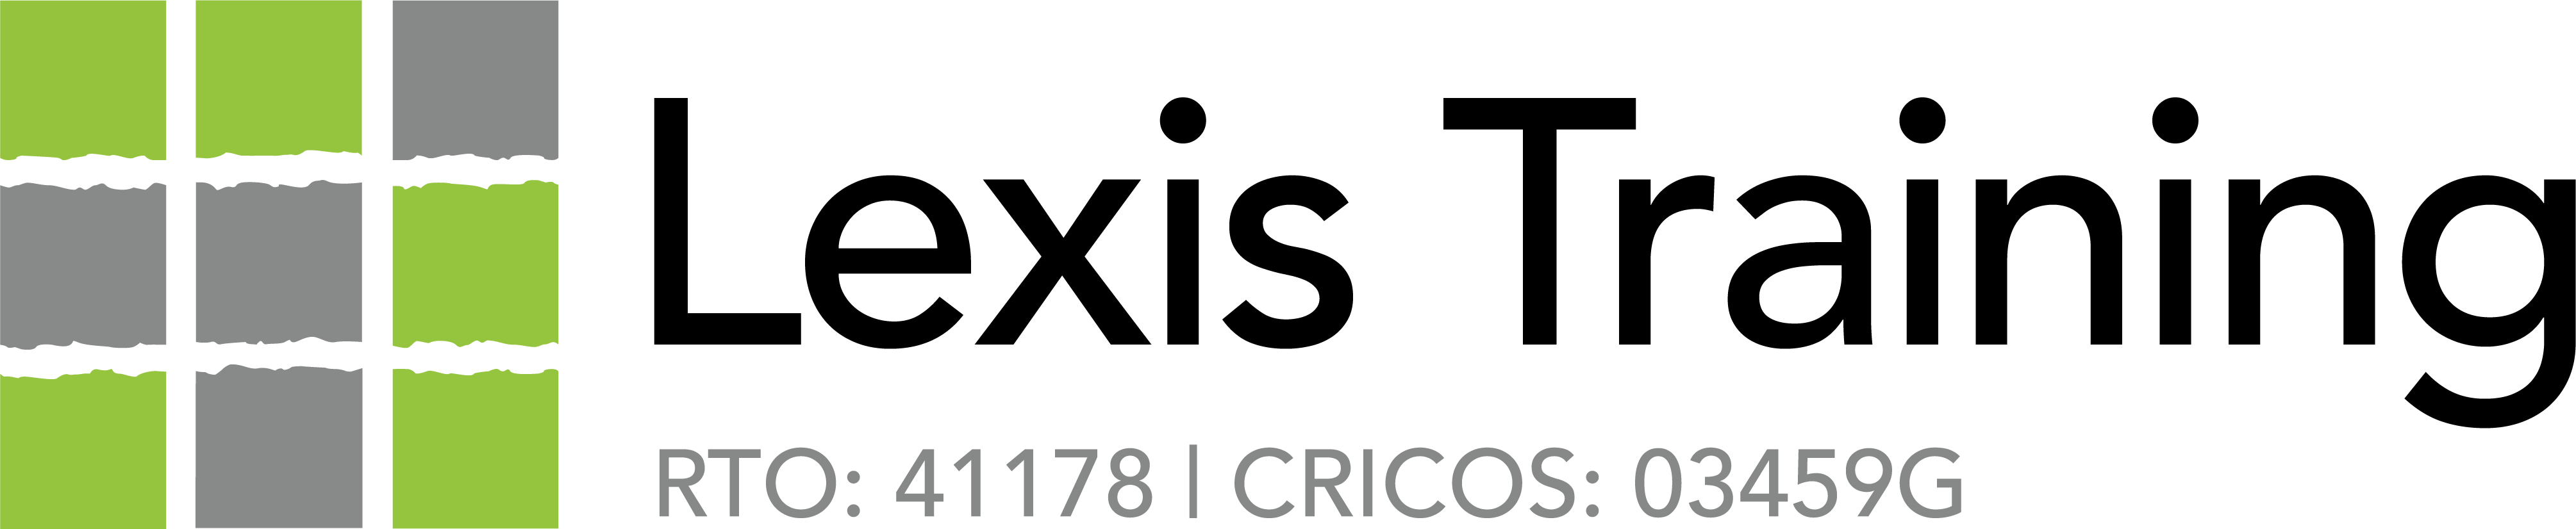 Lexis Training logo